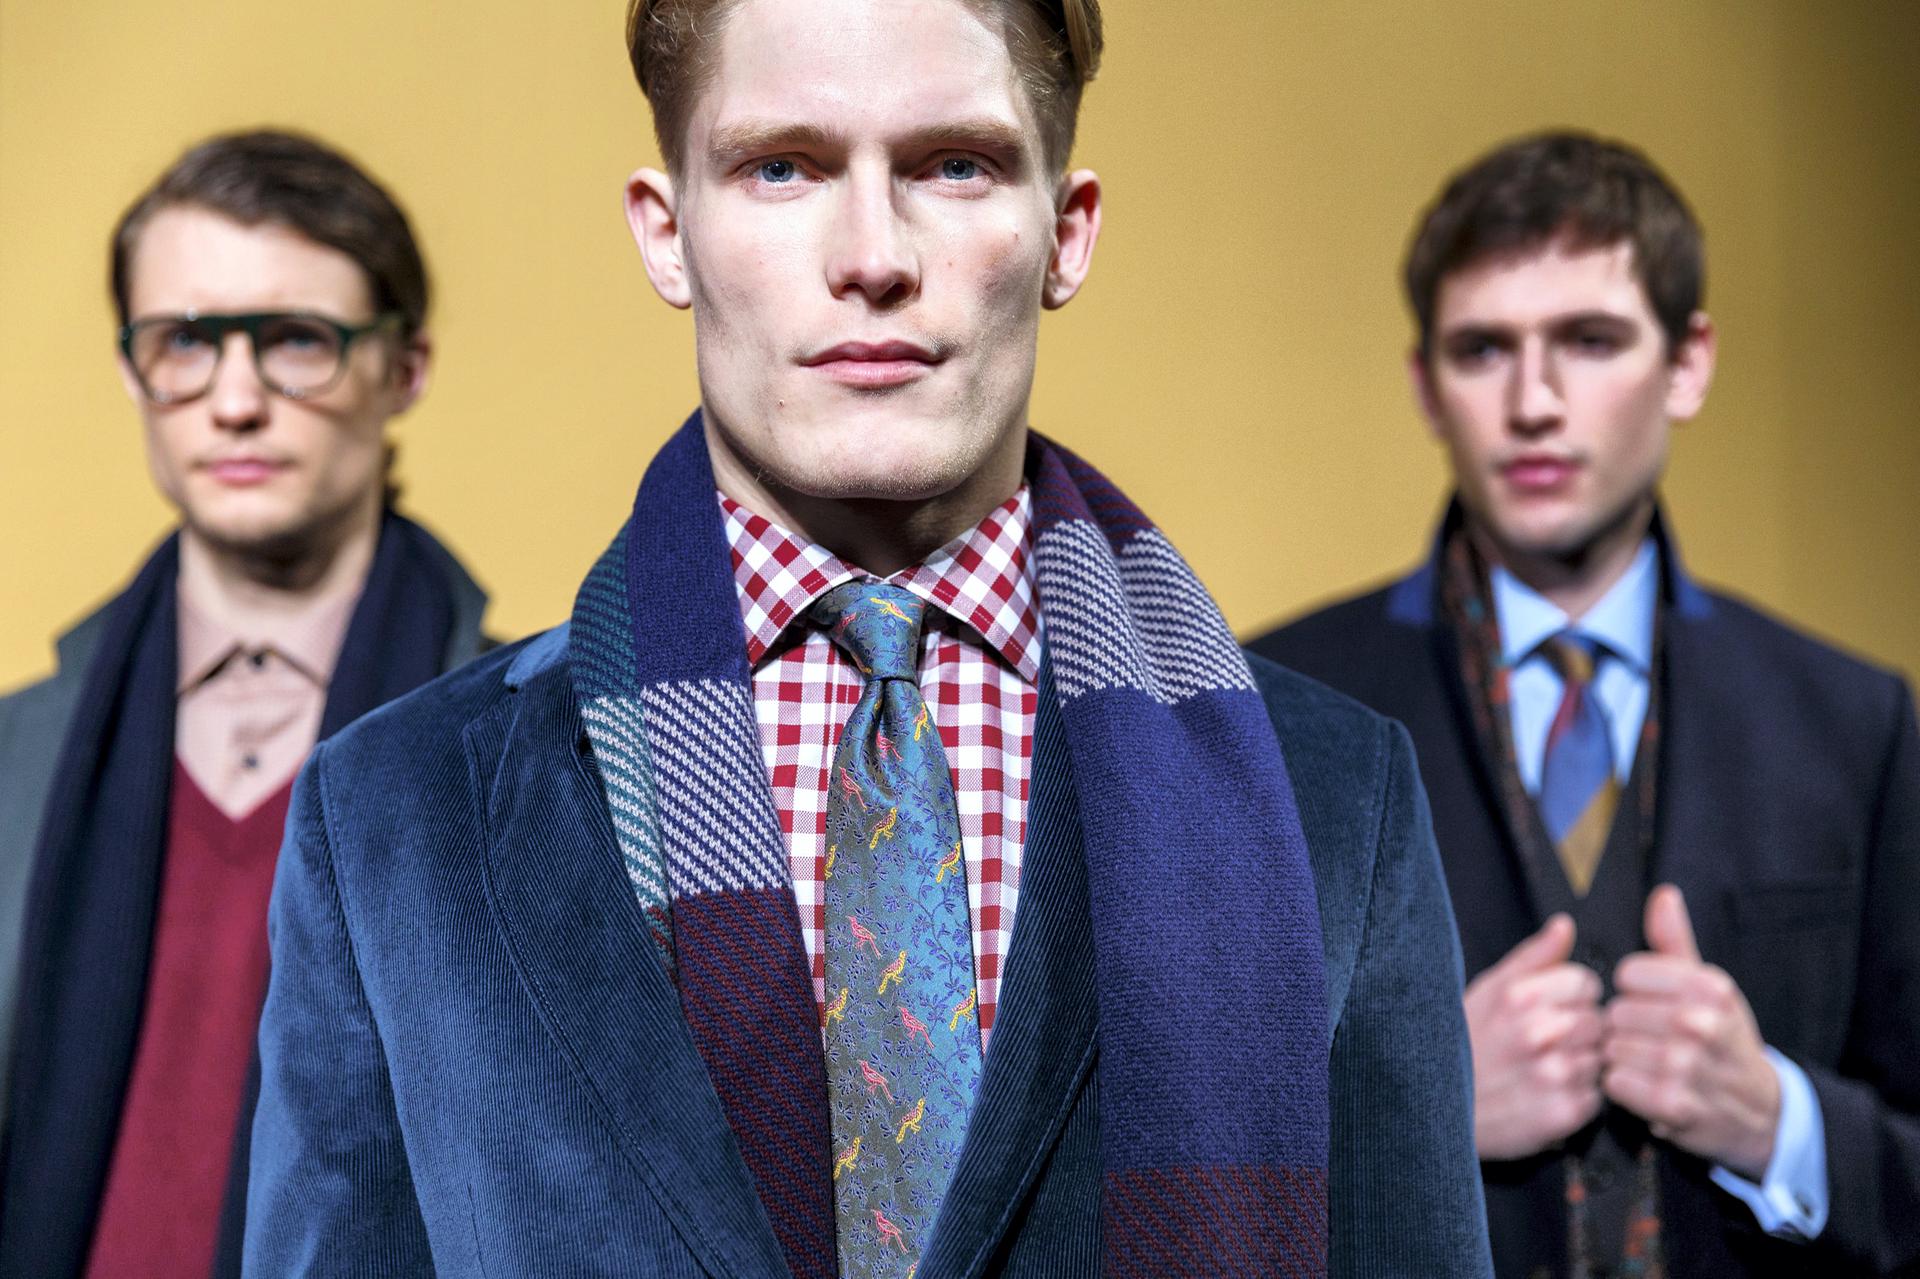 Vintage Thomas Pink Jermyn Street London Wool/Silk 75/25% Tie Luxury Designer Necktie Woven and Made in England Fabulous Quality